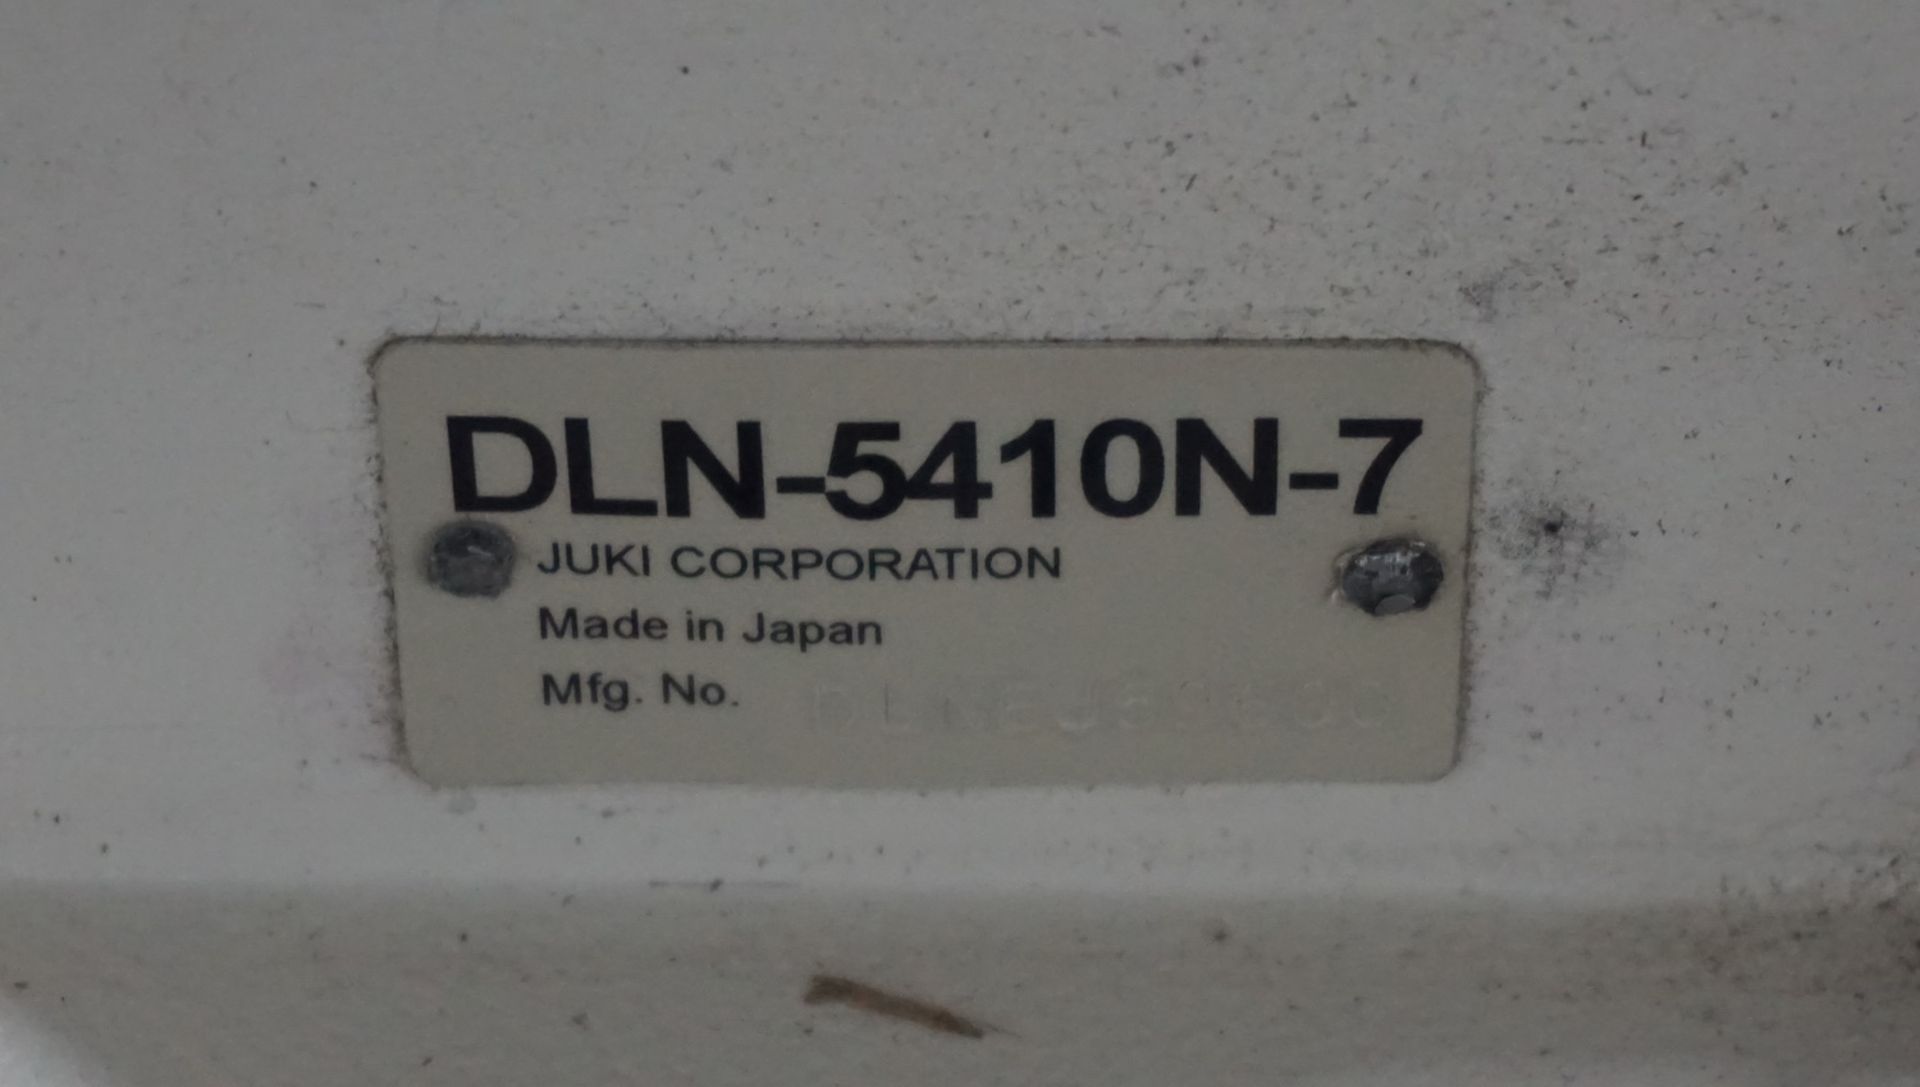 JUKI DLN-5410N-7 SINGLE NEEDLE SEWING MACHINE (200-240V, 3PH) (LOCATED @ 101 ALEXDON RD, TORONTO) - Image 6 of 6